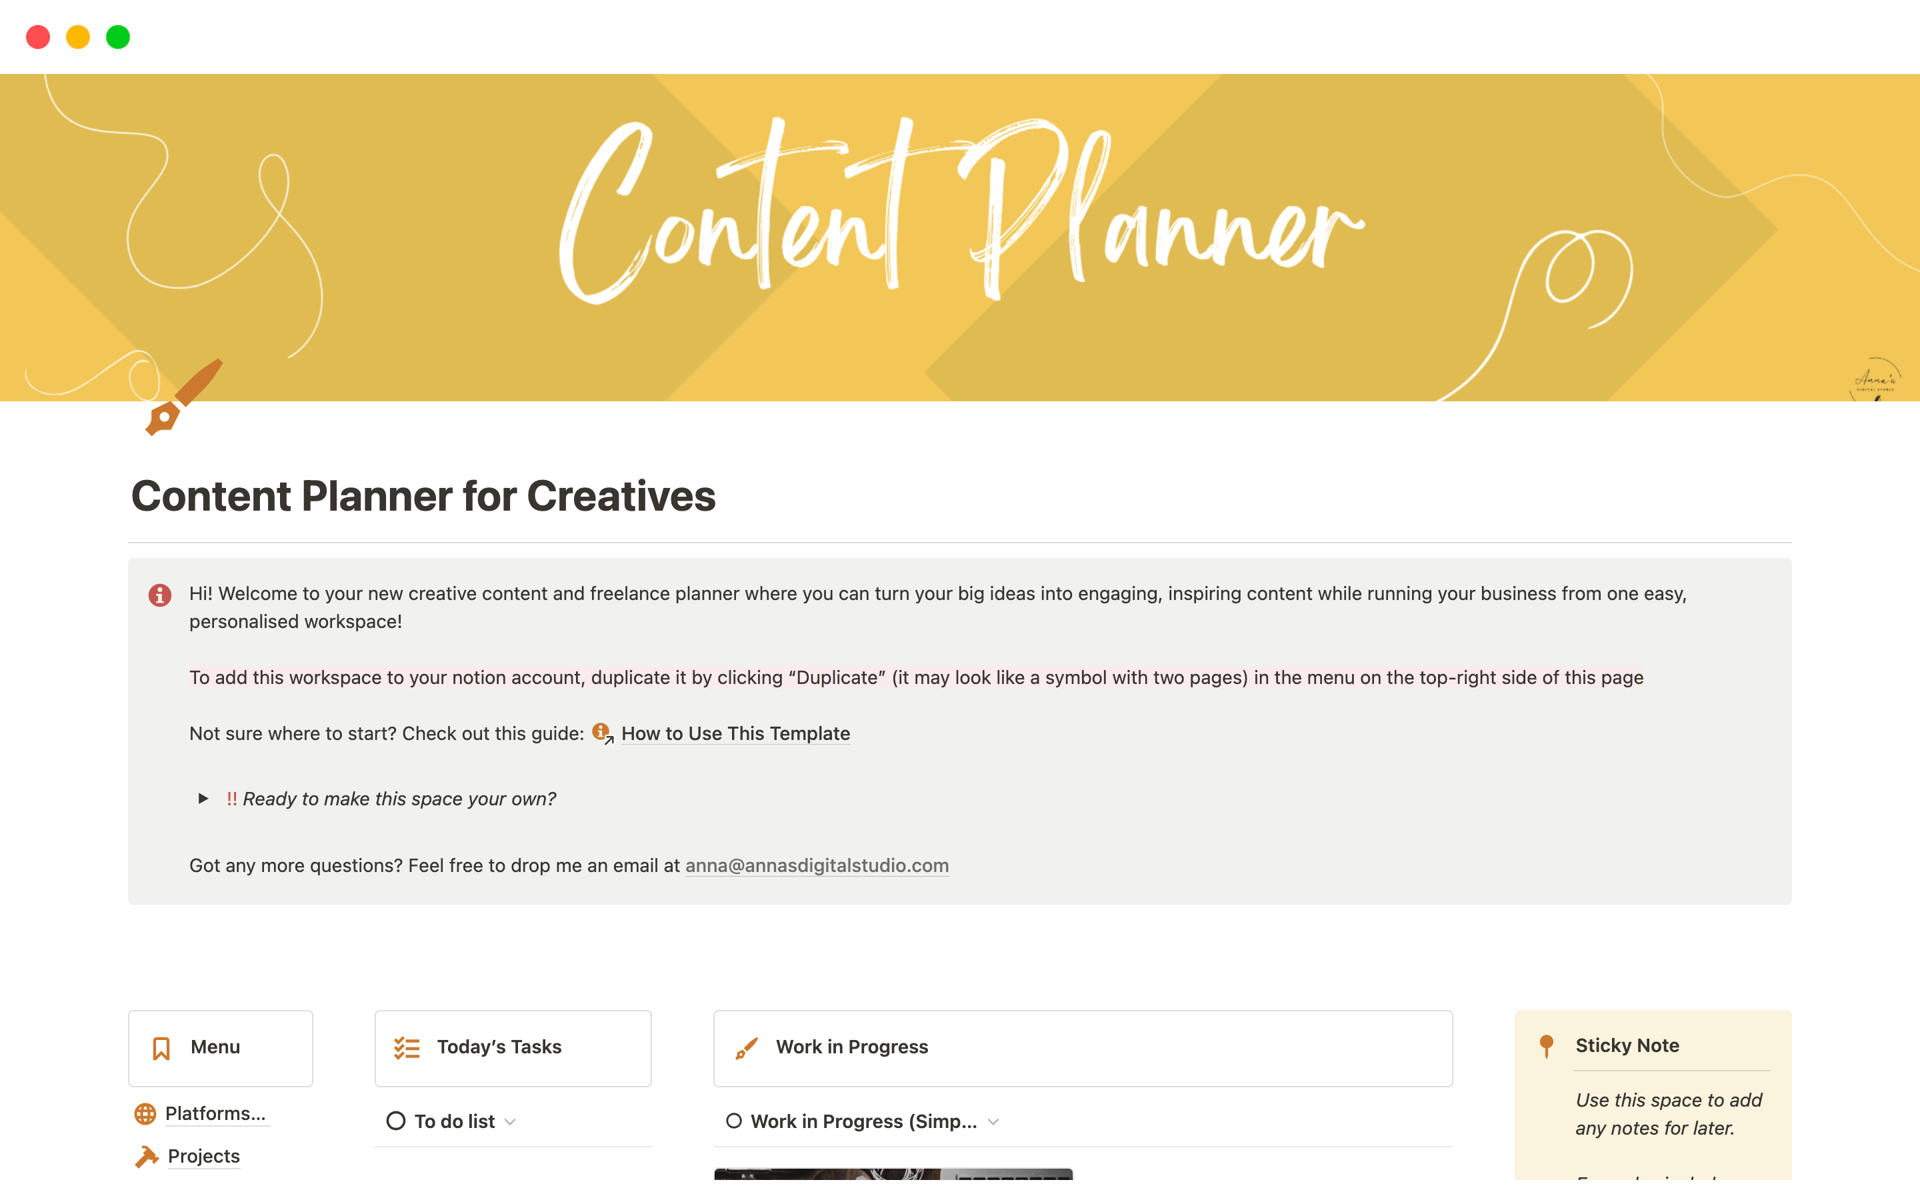 Content Planner for Freelancers and Creatives님의 템플릿 미리보기